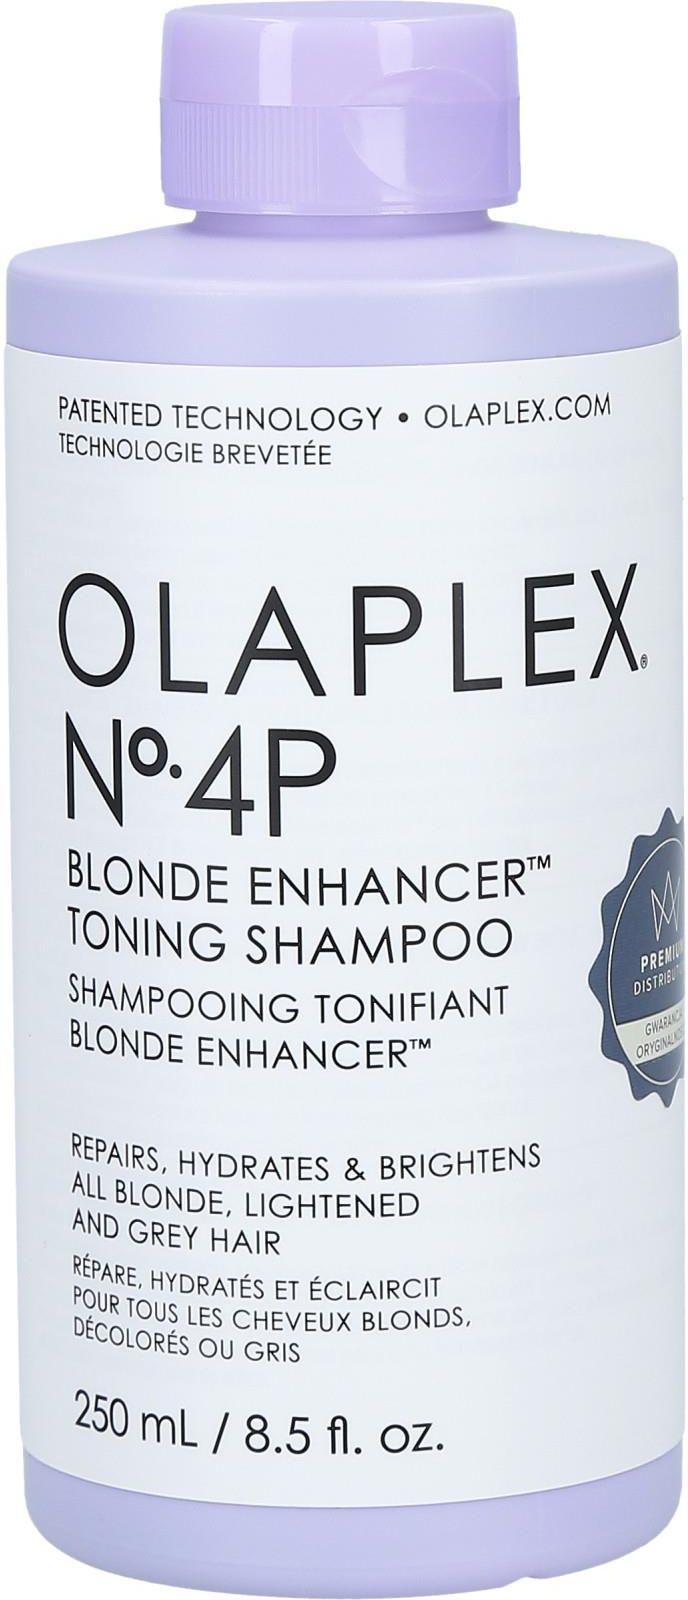 szampon olaplex 4 ceneo